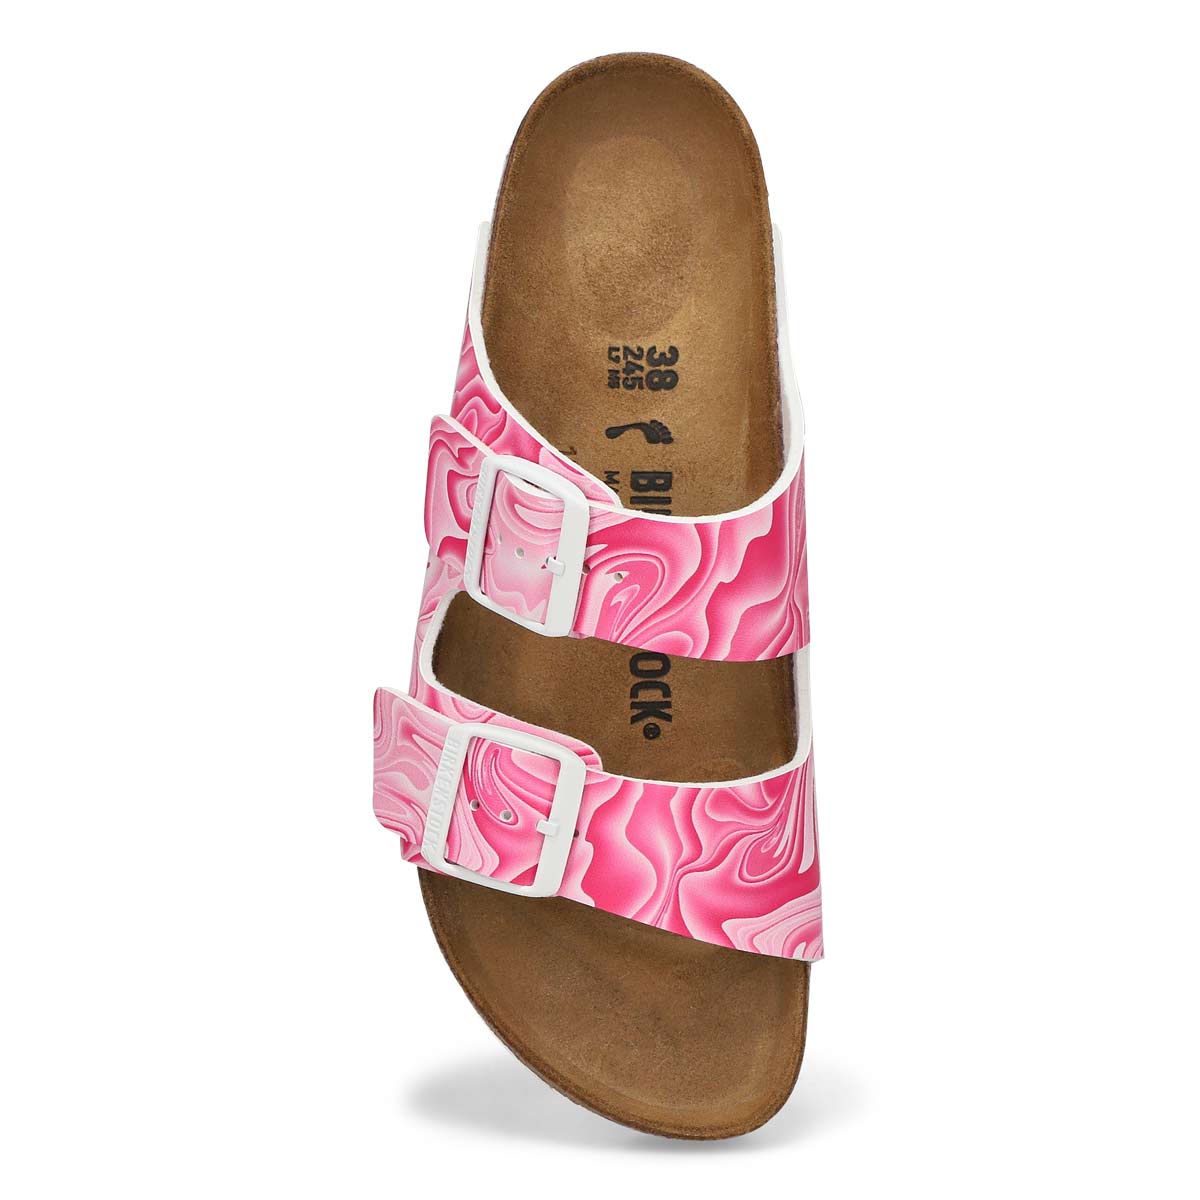 Womens Arizona Birko-Flor Narrow Sandal - Pink/White